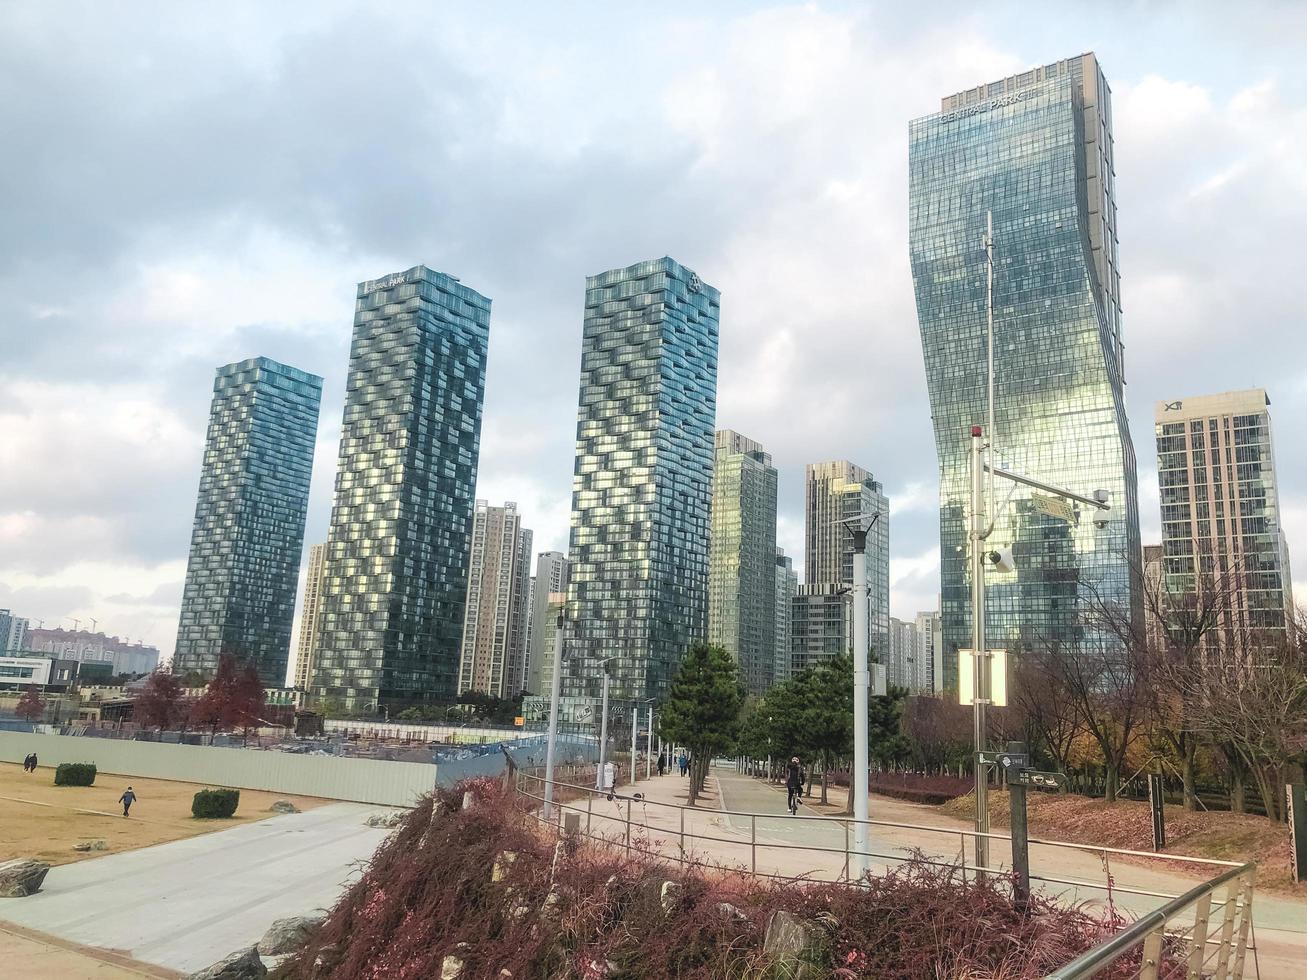 incheon city, Sydkorea, 2021 - stora byggnader i stadsparken i incheon city foto